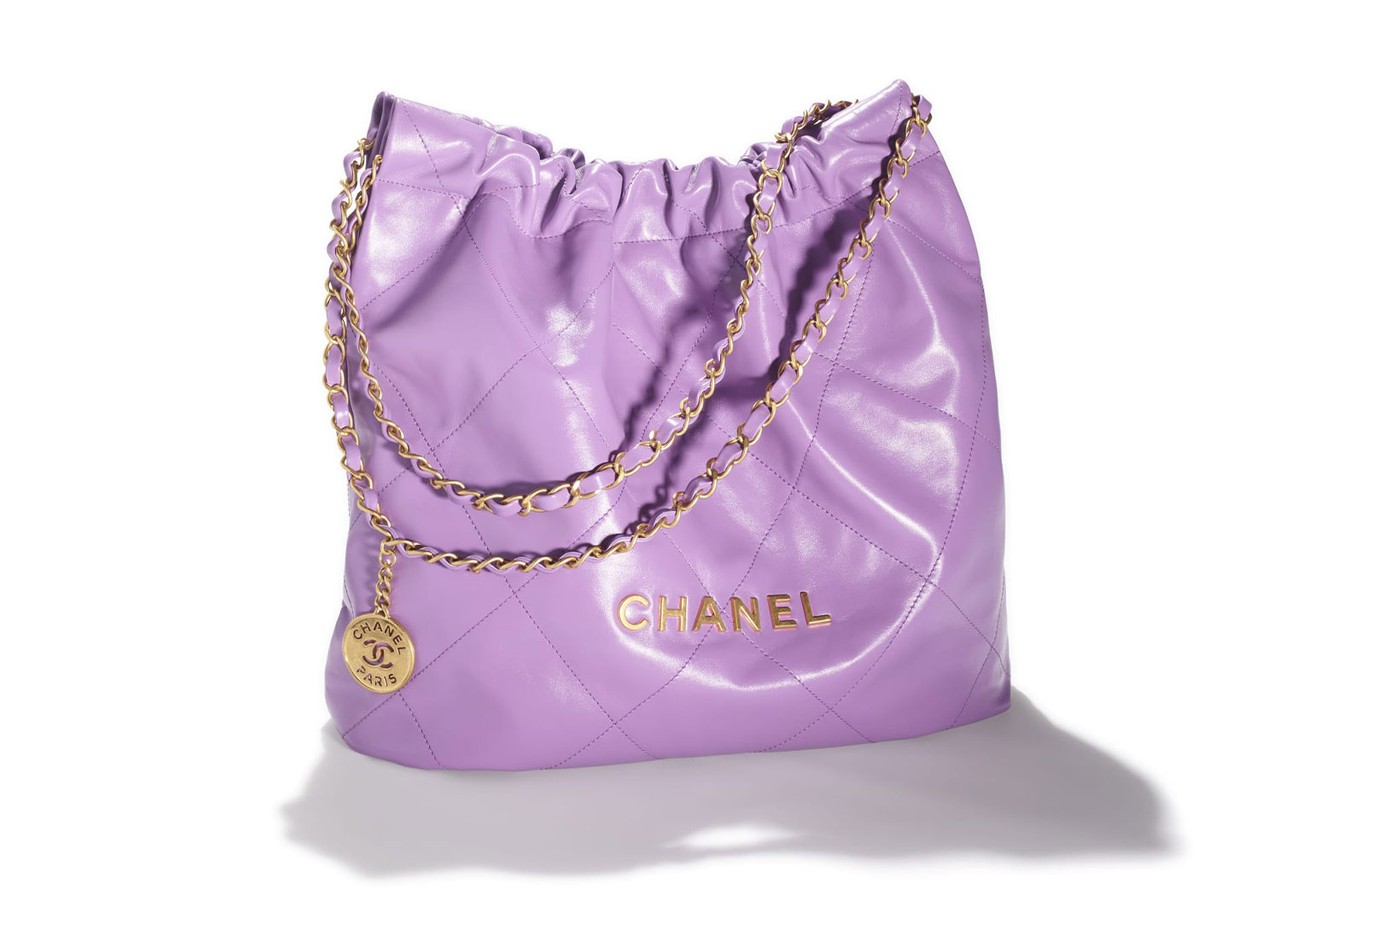 Виржини Виар представила новую сумку Chanel (фото 1)